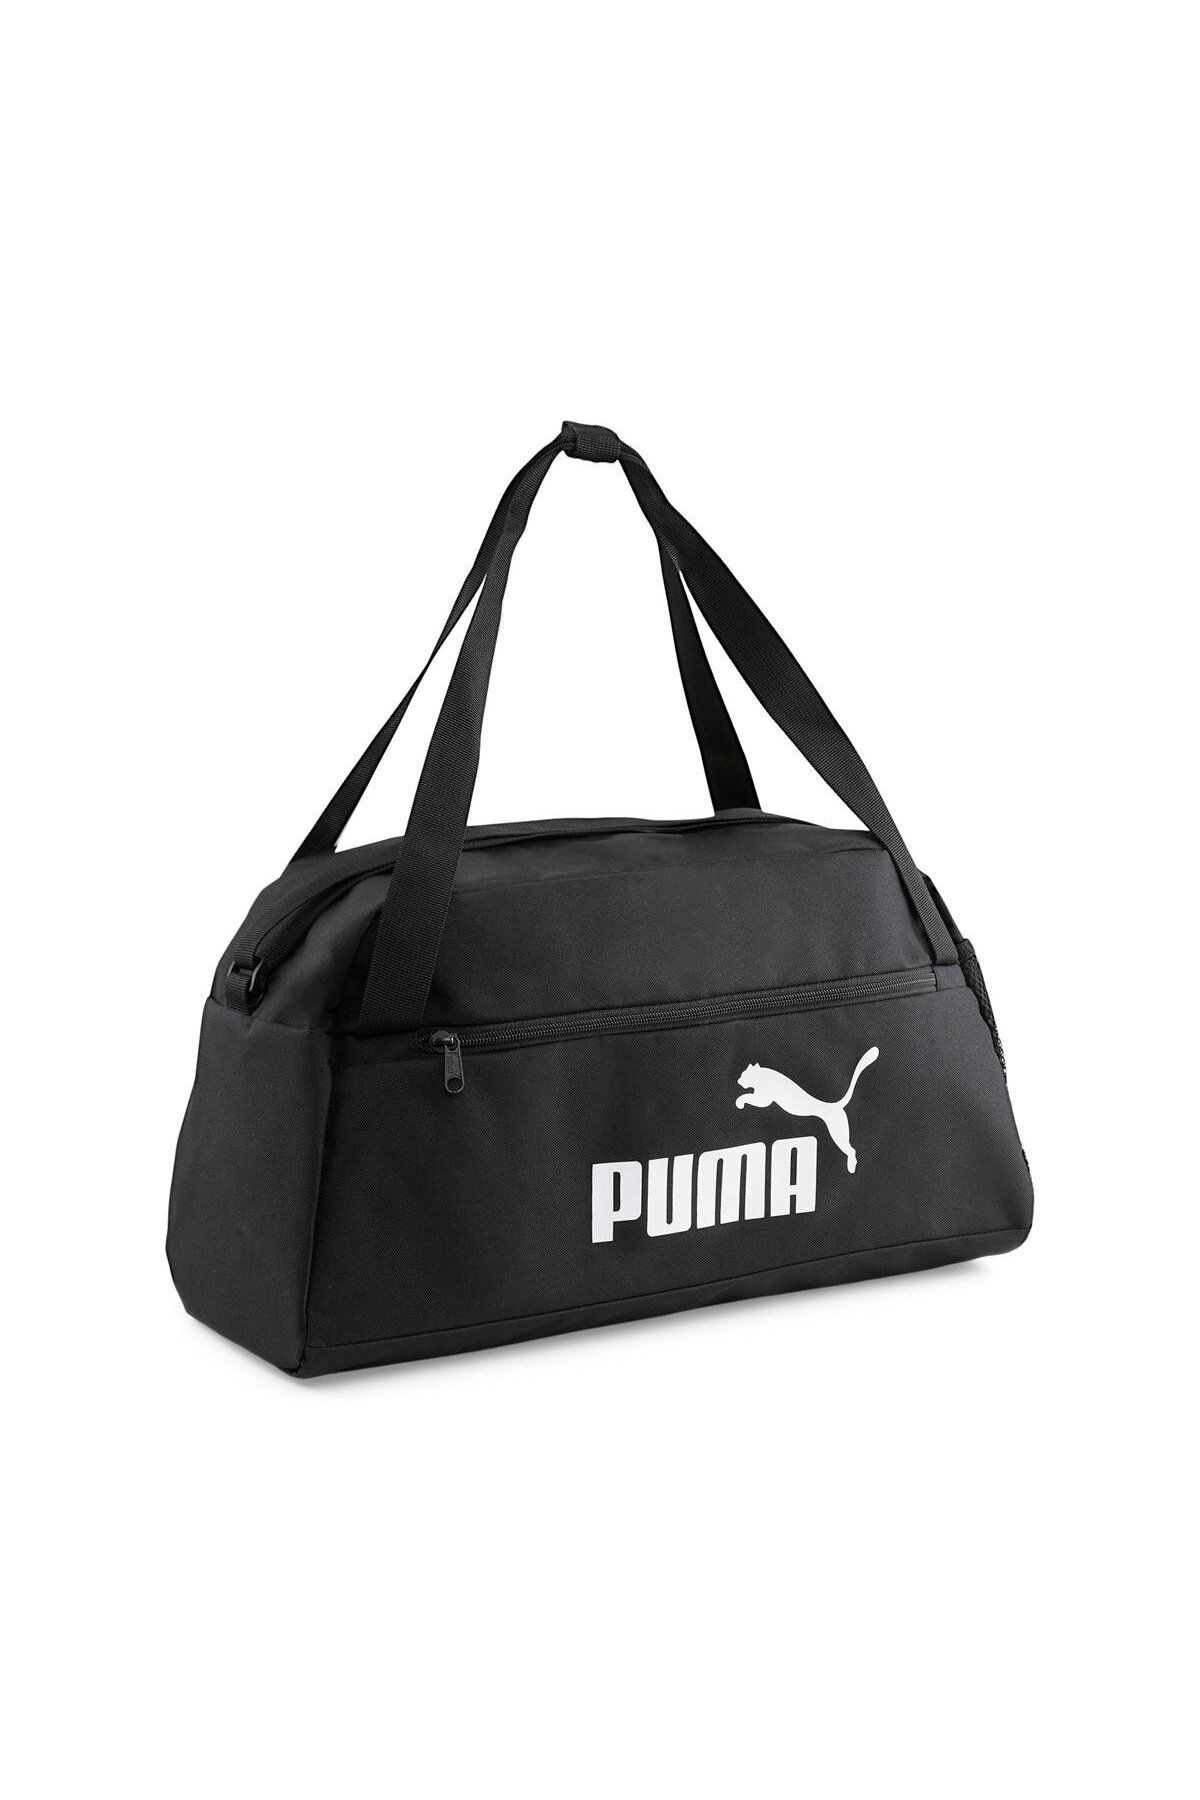 Puma Phase Sports Bag Unisex Spor Çantası